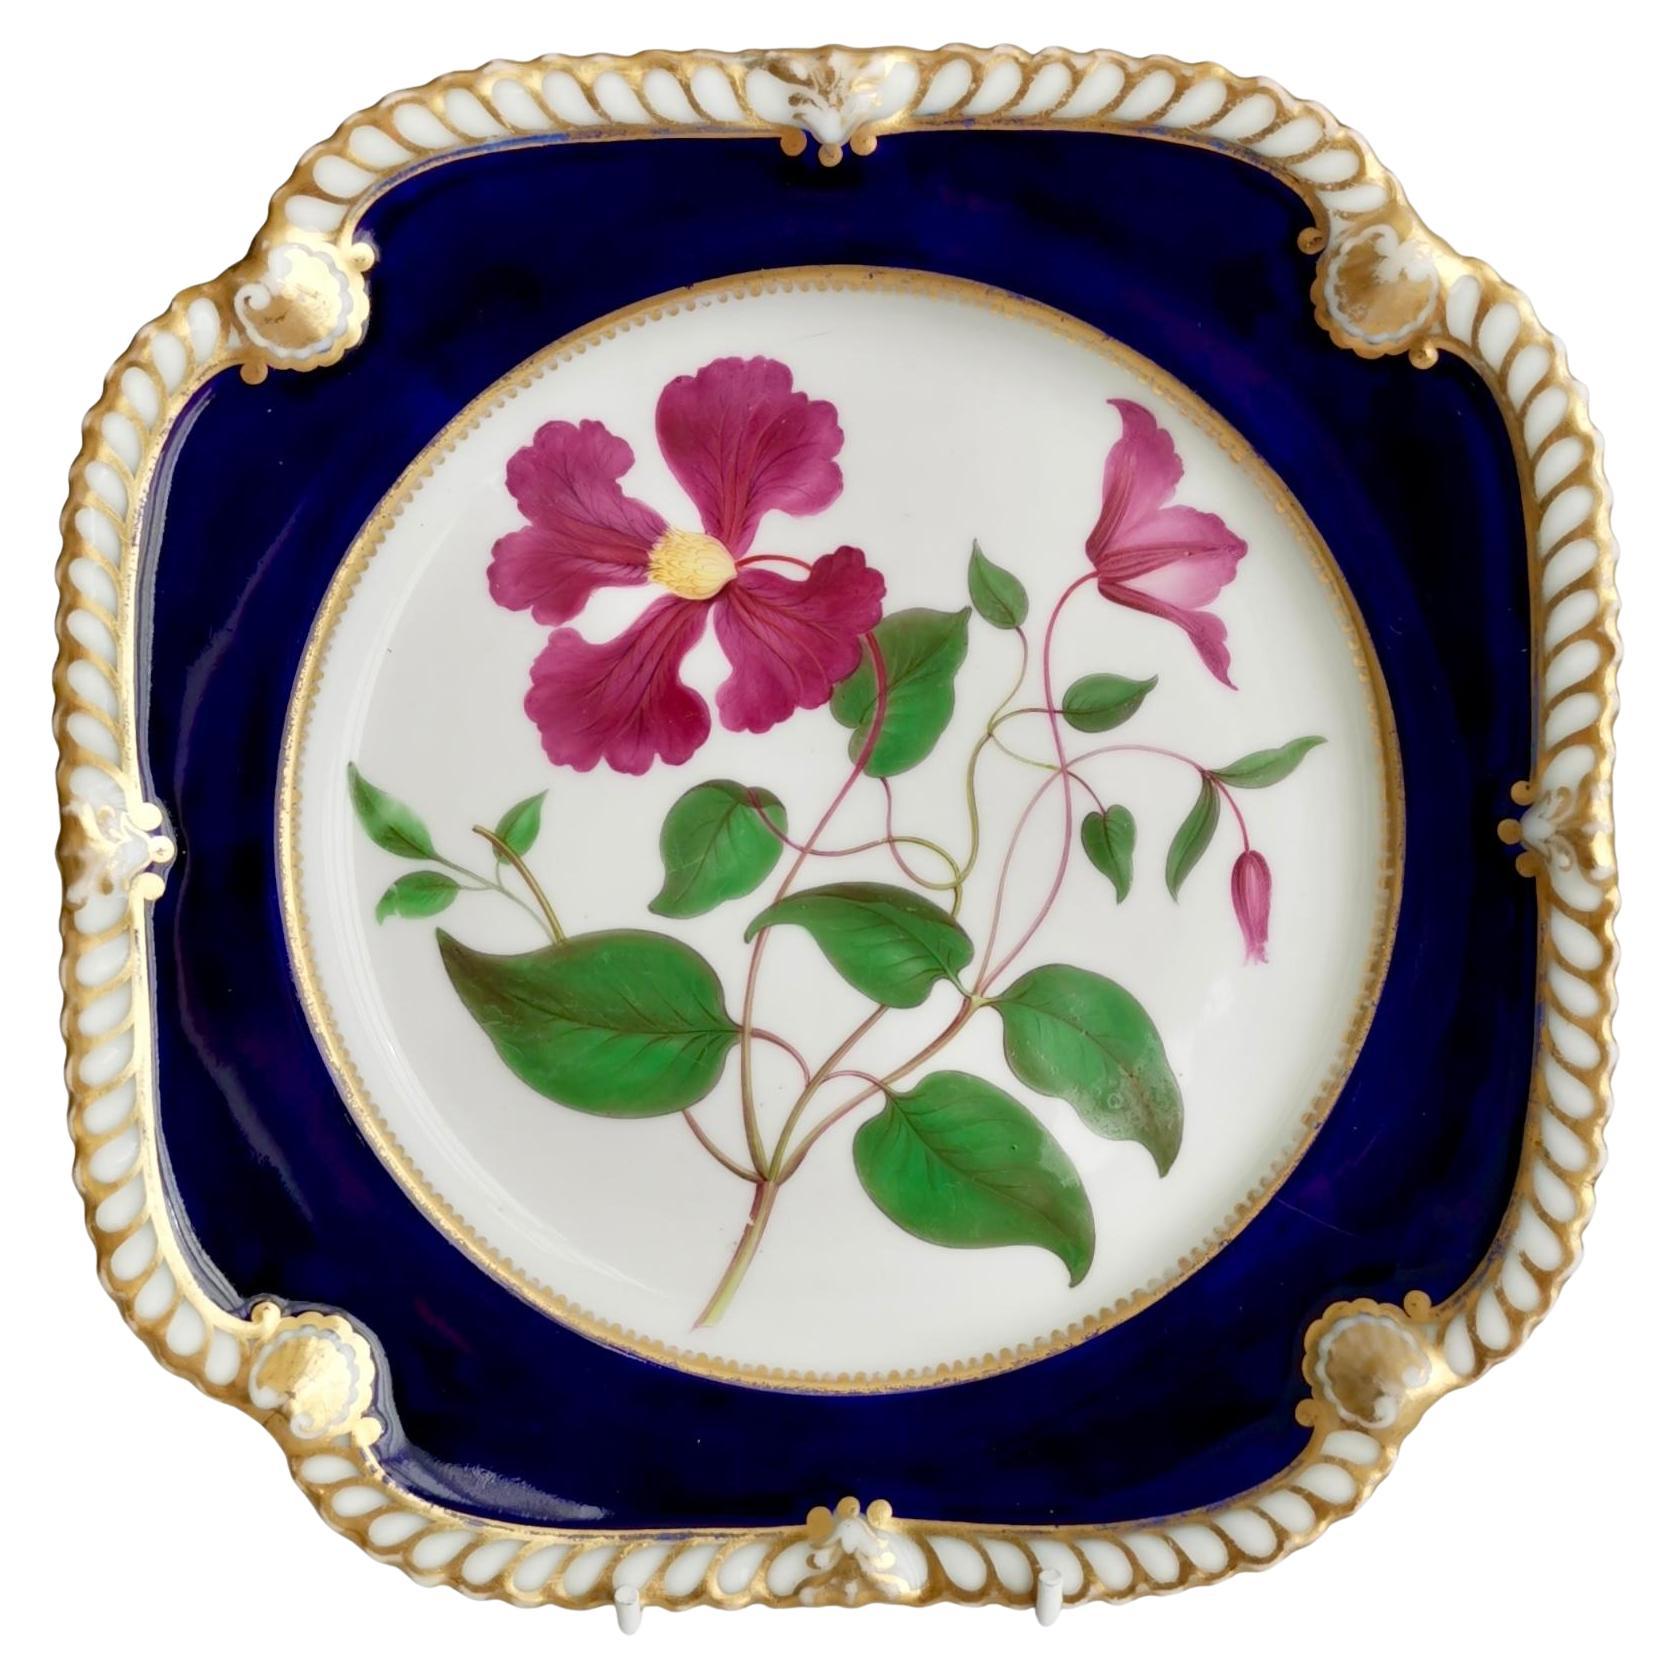 Chamberlains Worcester Plate, Named Purple Virgin's Bower, Regency ca 1820